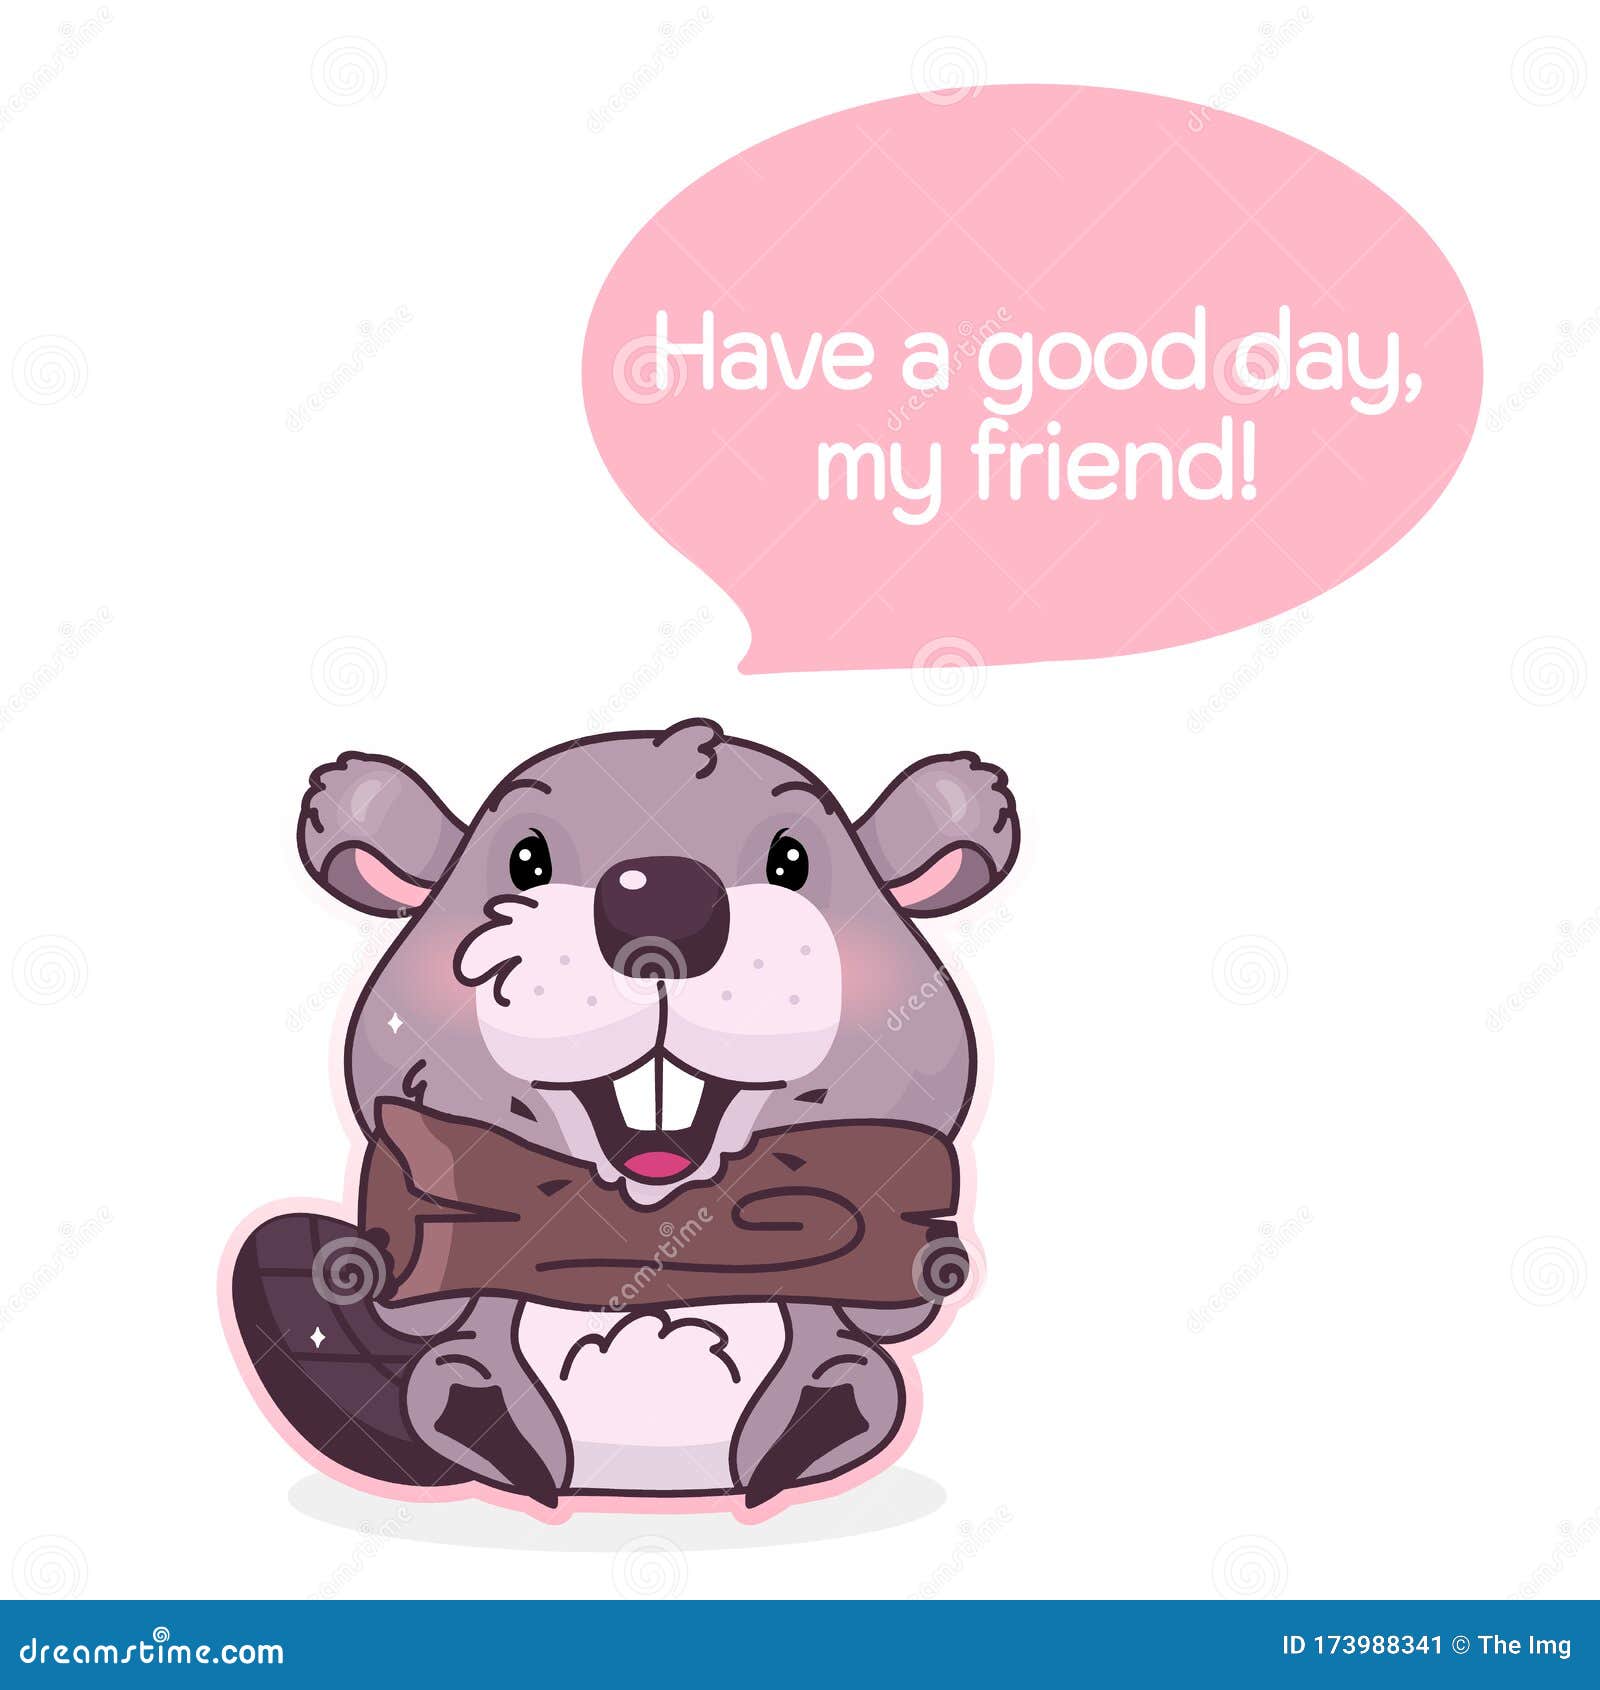 Cute Beaver Cartoon Kawaii Vector Character. Have a Good Day My Friend  Phrase Inside Speech Bubble Stock Vector - Illustration of cartoon, rodent:  173988341